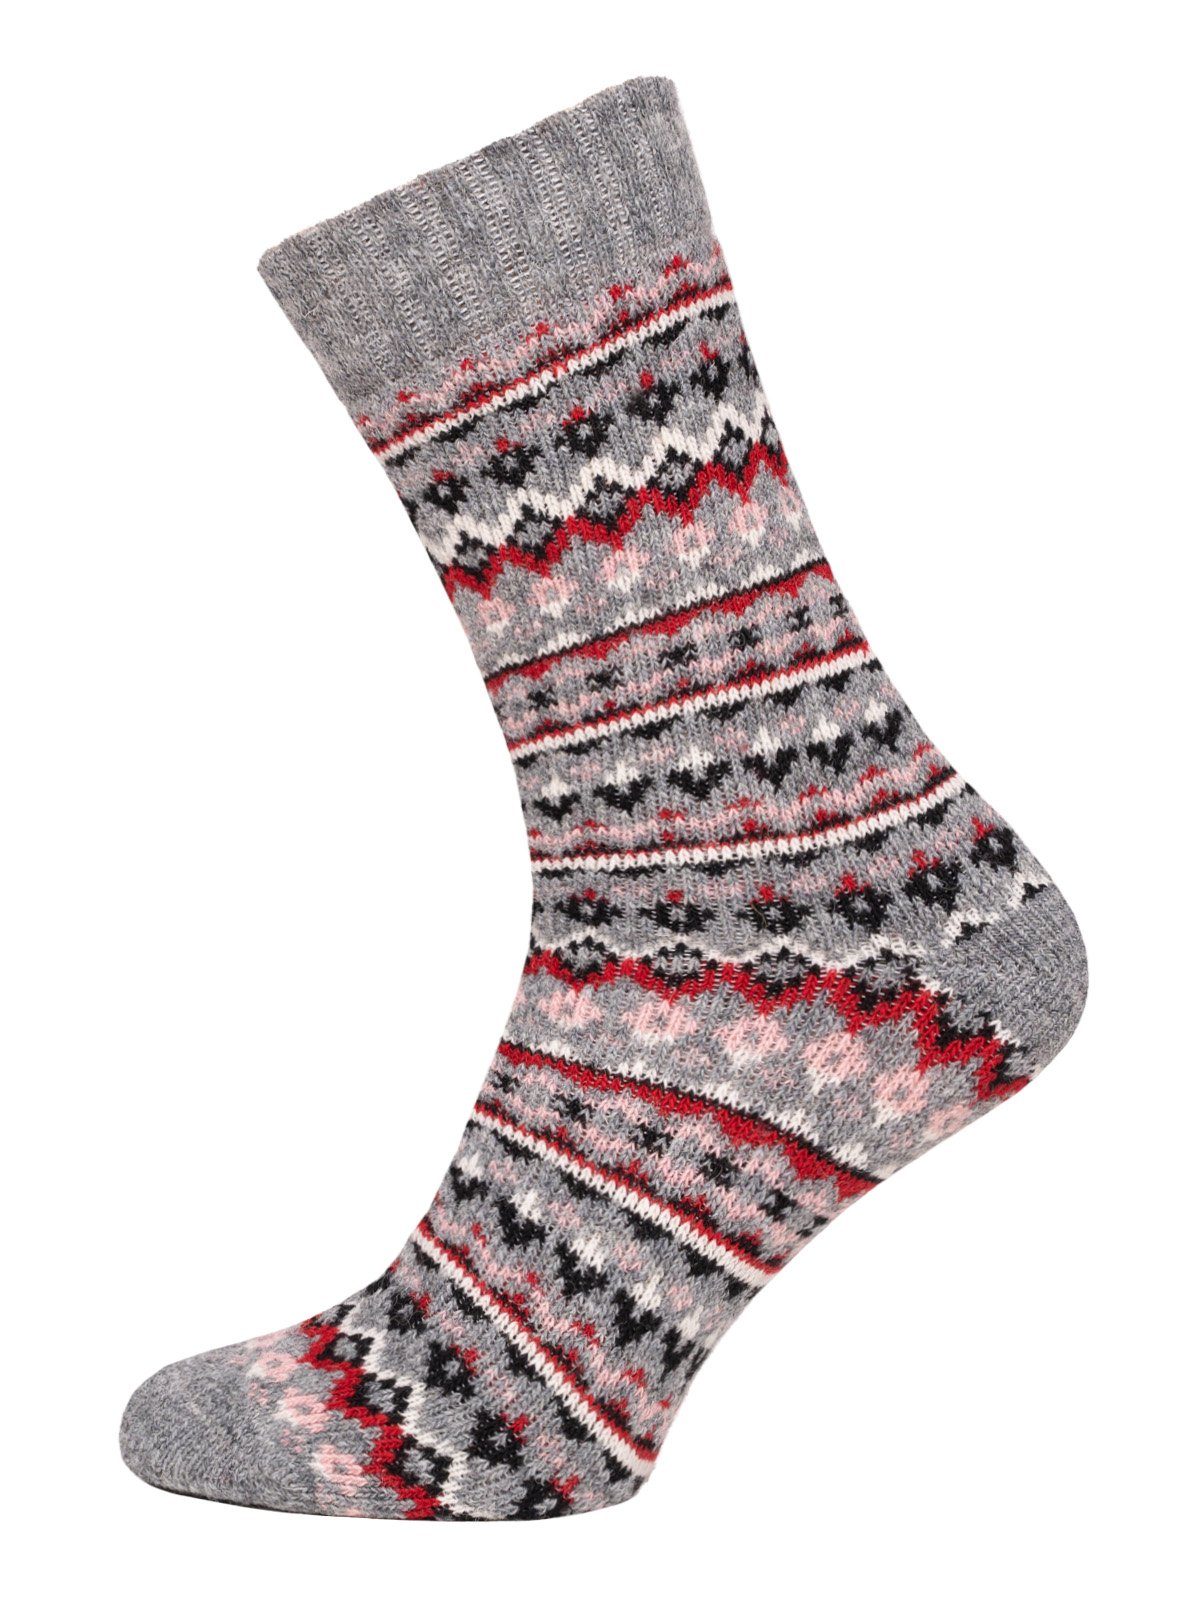 Socken Für Socken Bunten In Warm Dick 45% Hyggelig Grau Herren Mit HomeOfSocks mit Hygge Wollanteil Design Hohem & Socken Wolle Damen Dicke